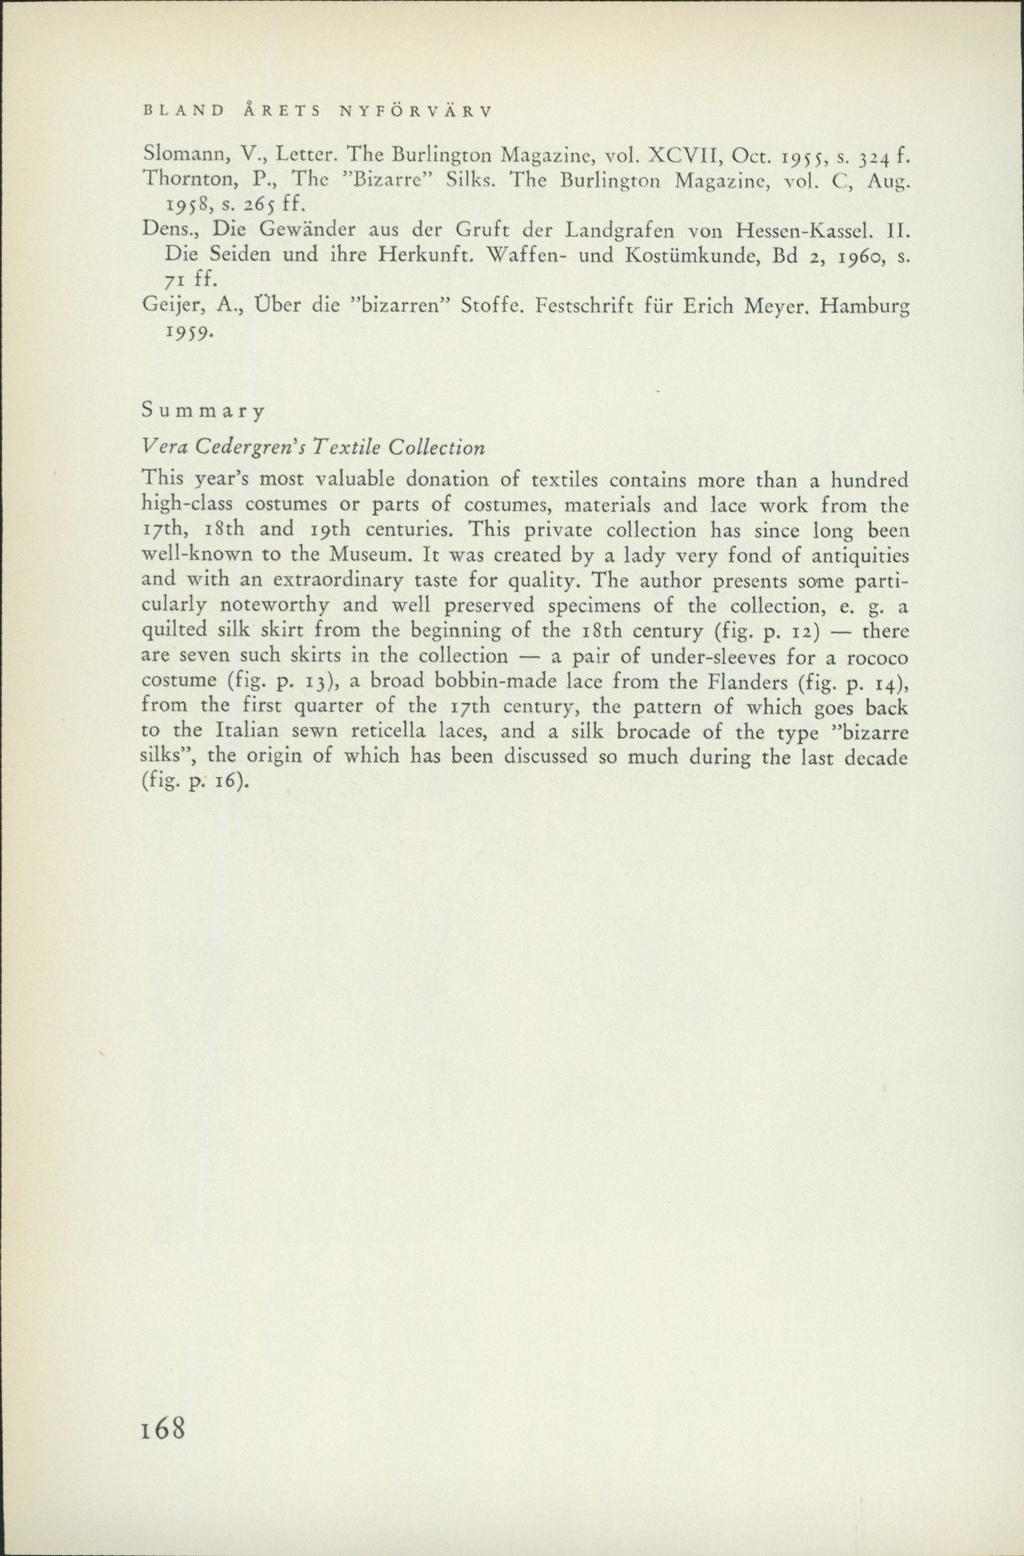 Slomann, V., Letter. The Burlington Magazine, vol. XCVII, Oct. 195s, s. 324 f. Thornton, P., The Bizarre Silks. The Burlington Magazine, vol. C, Aug. 1958, s. 265 ff. Dens.